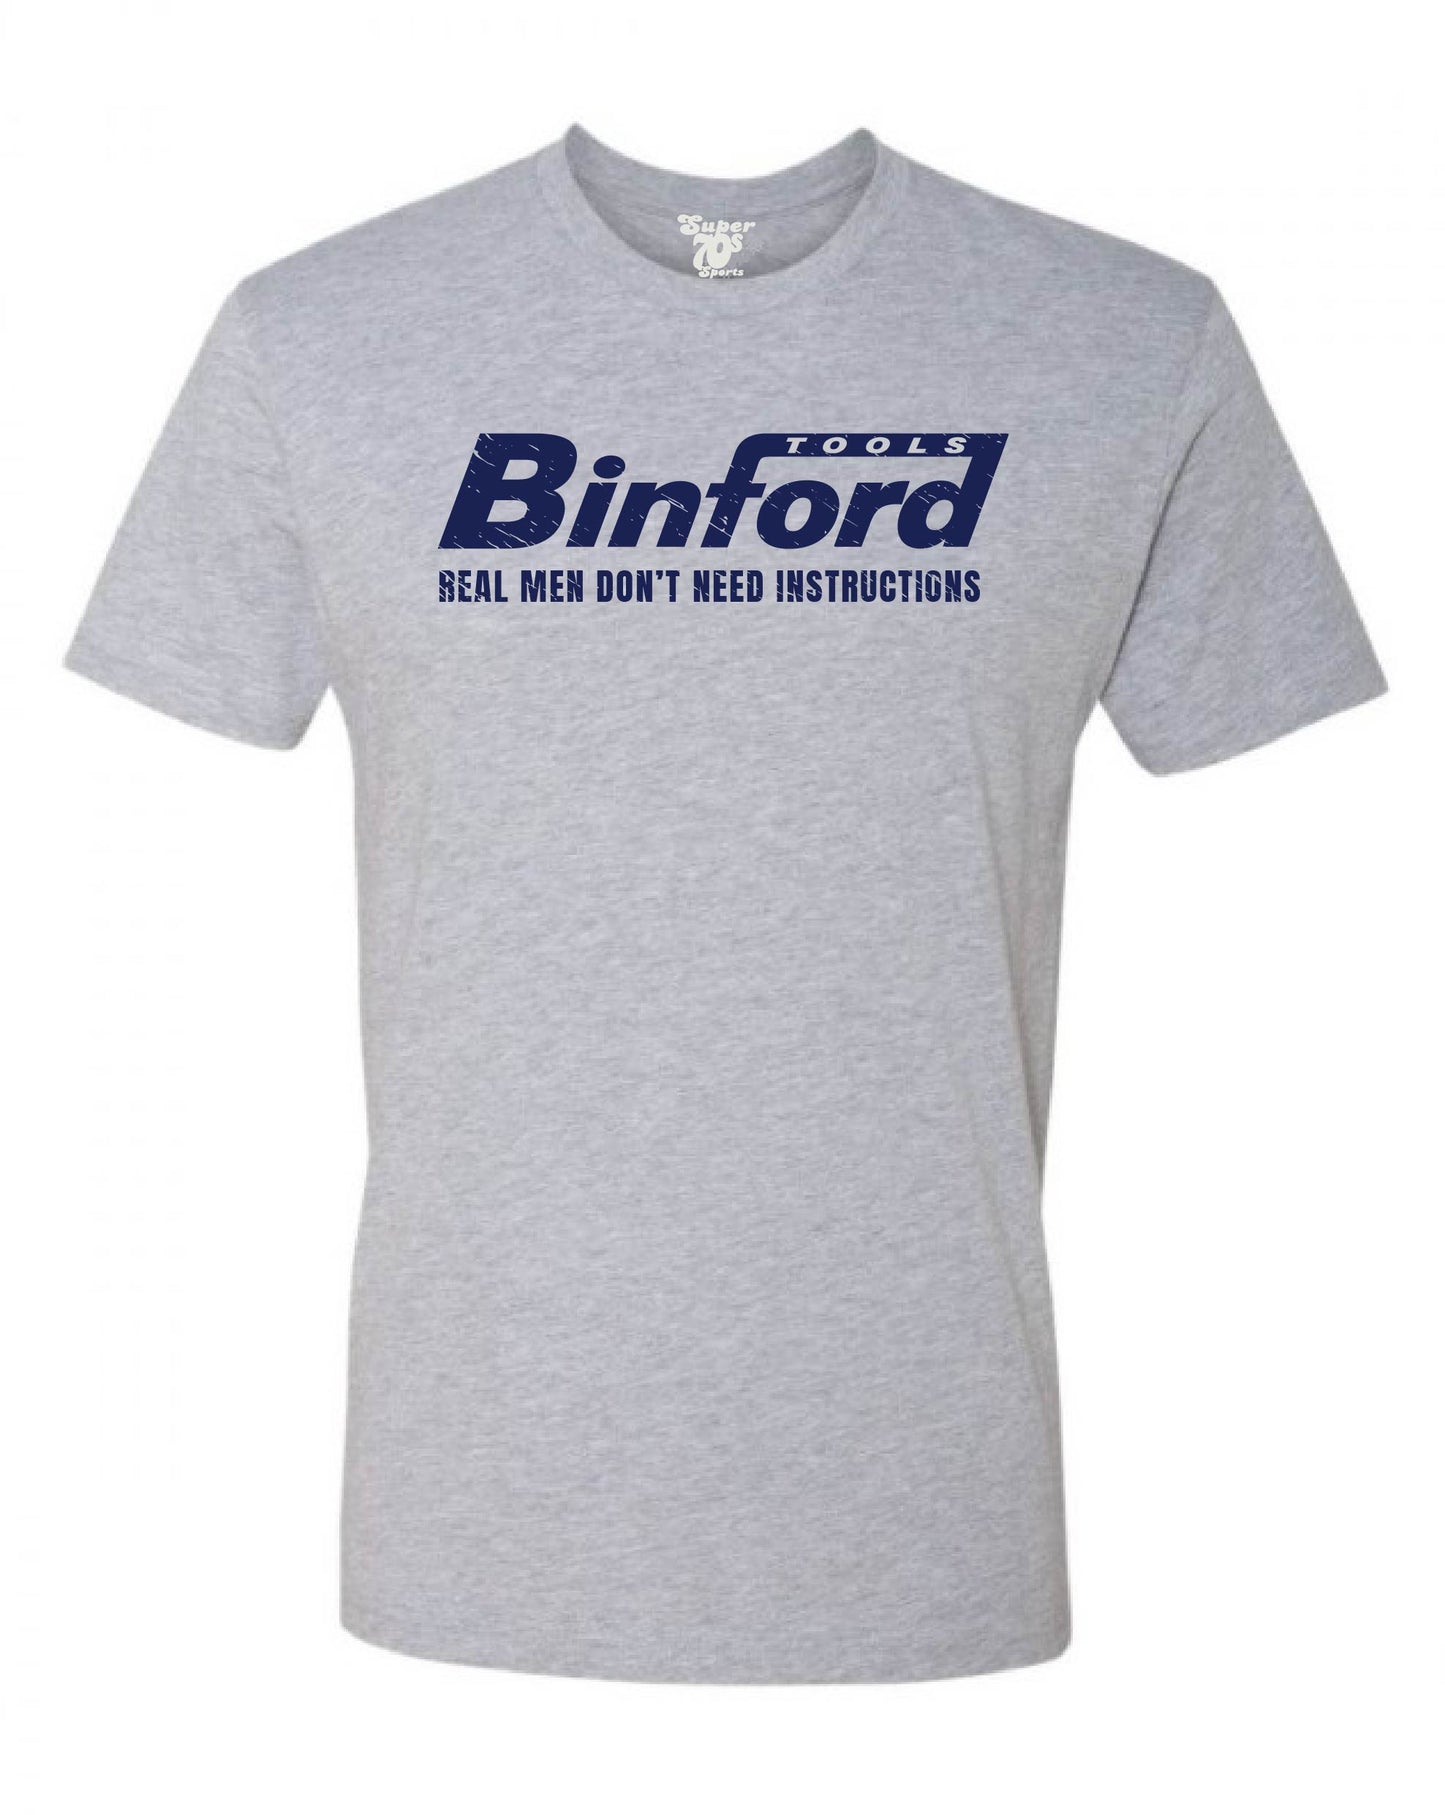 Binford Tools Tee